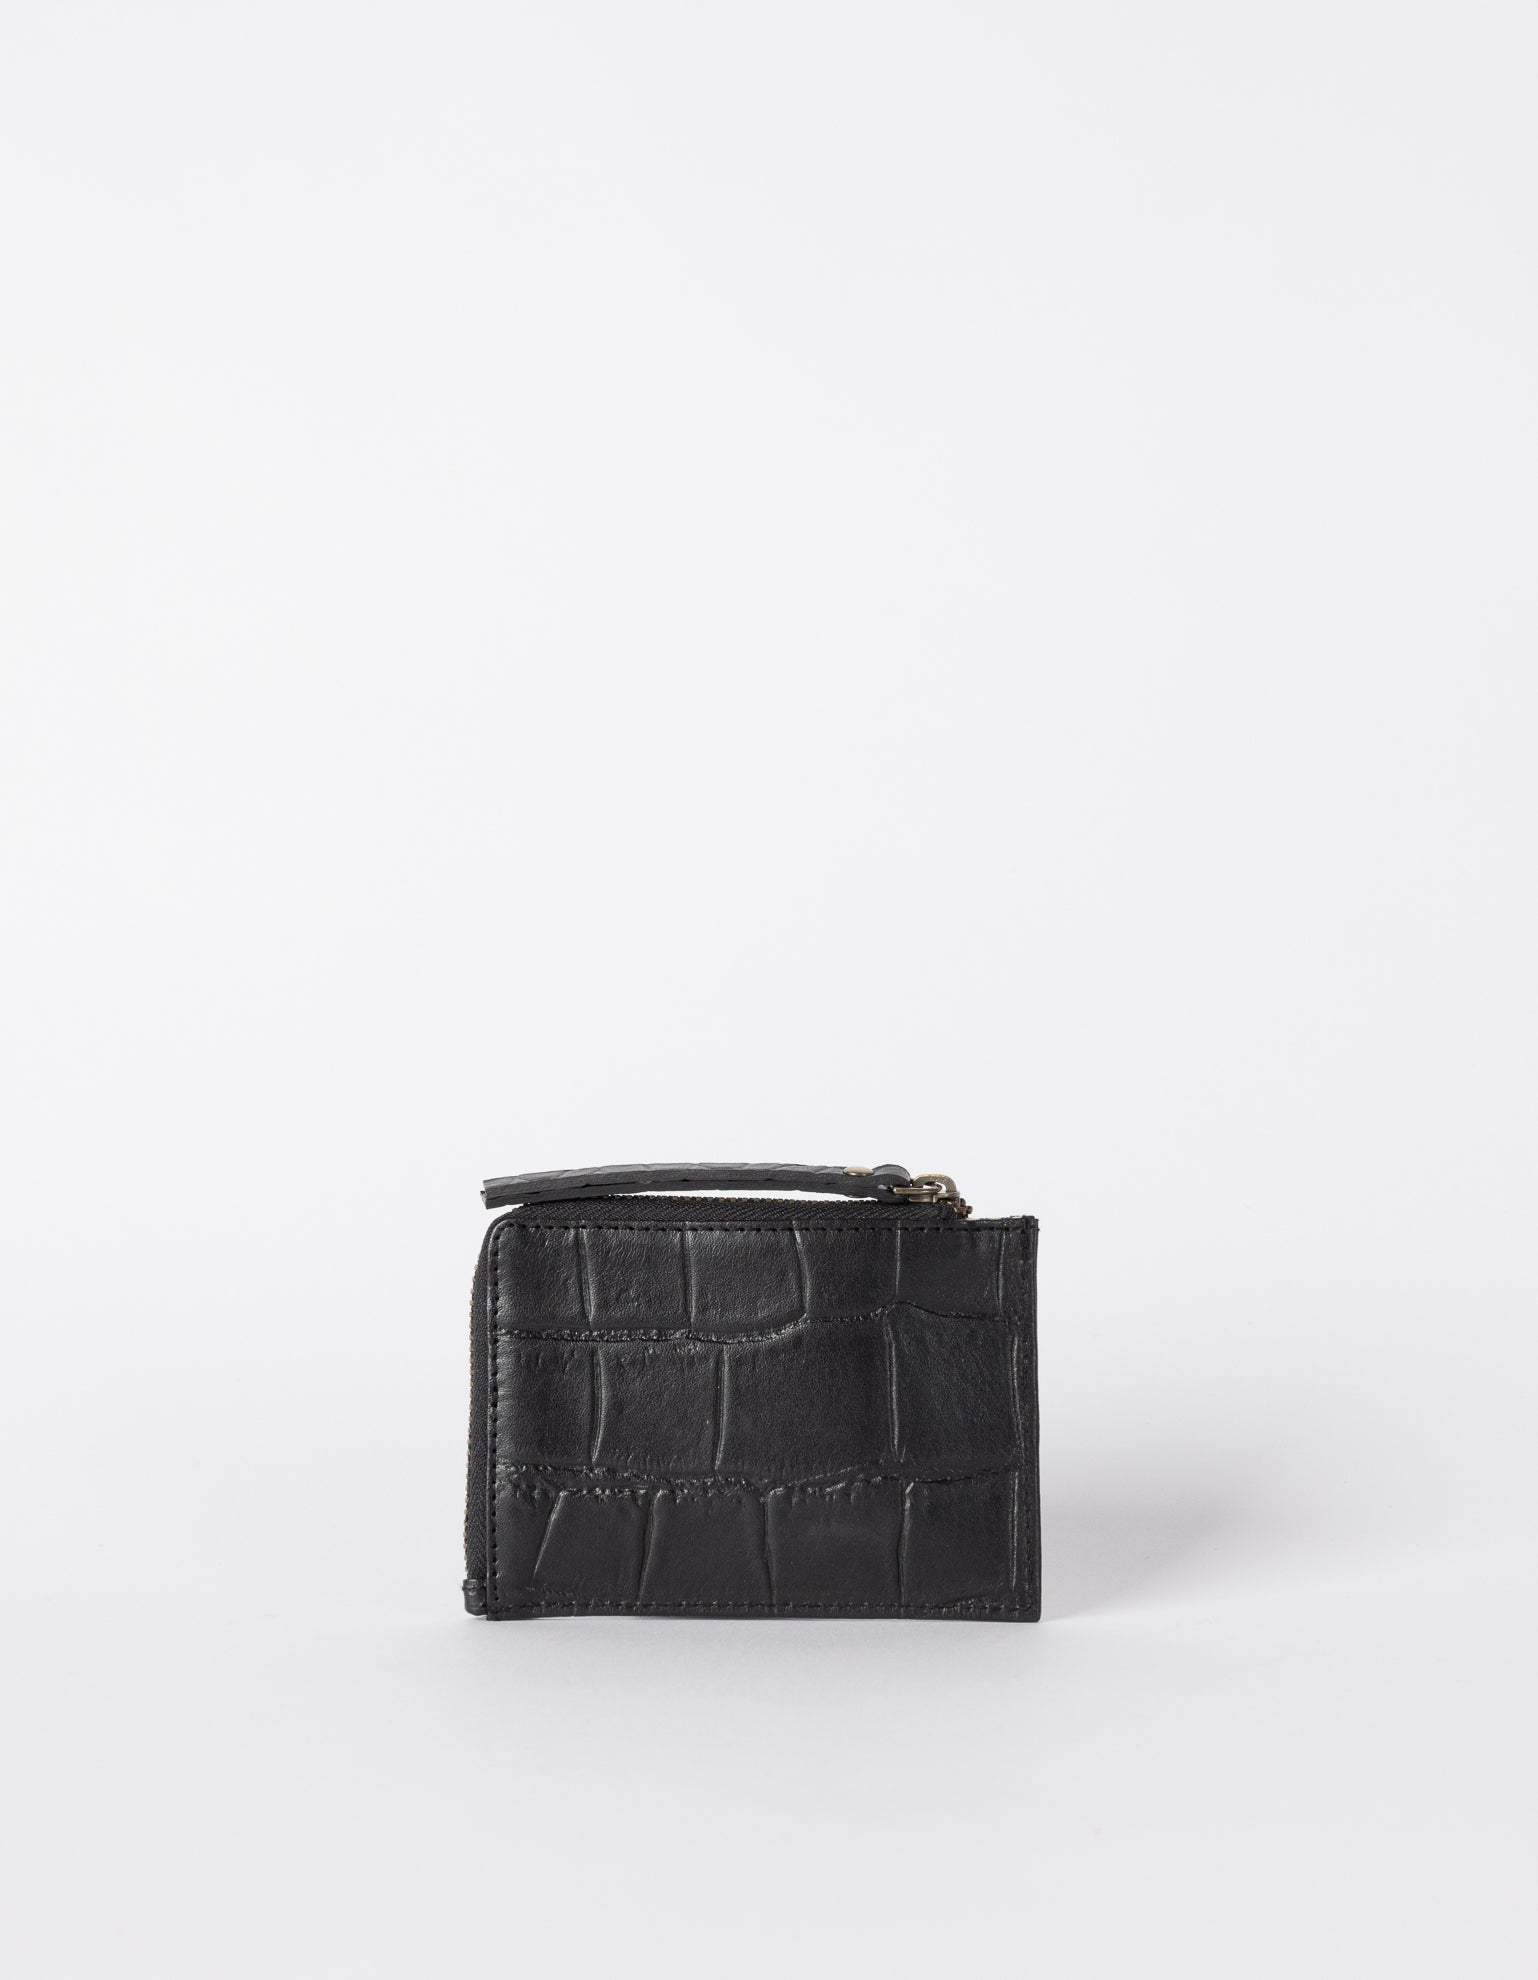 Small Black Croco Leather coin purse. Square shape. Back image